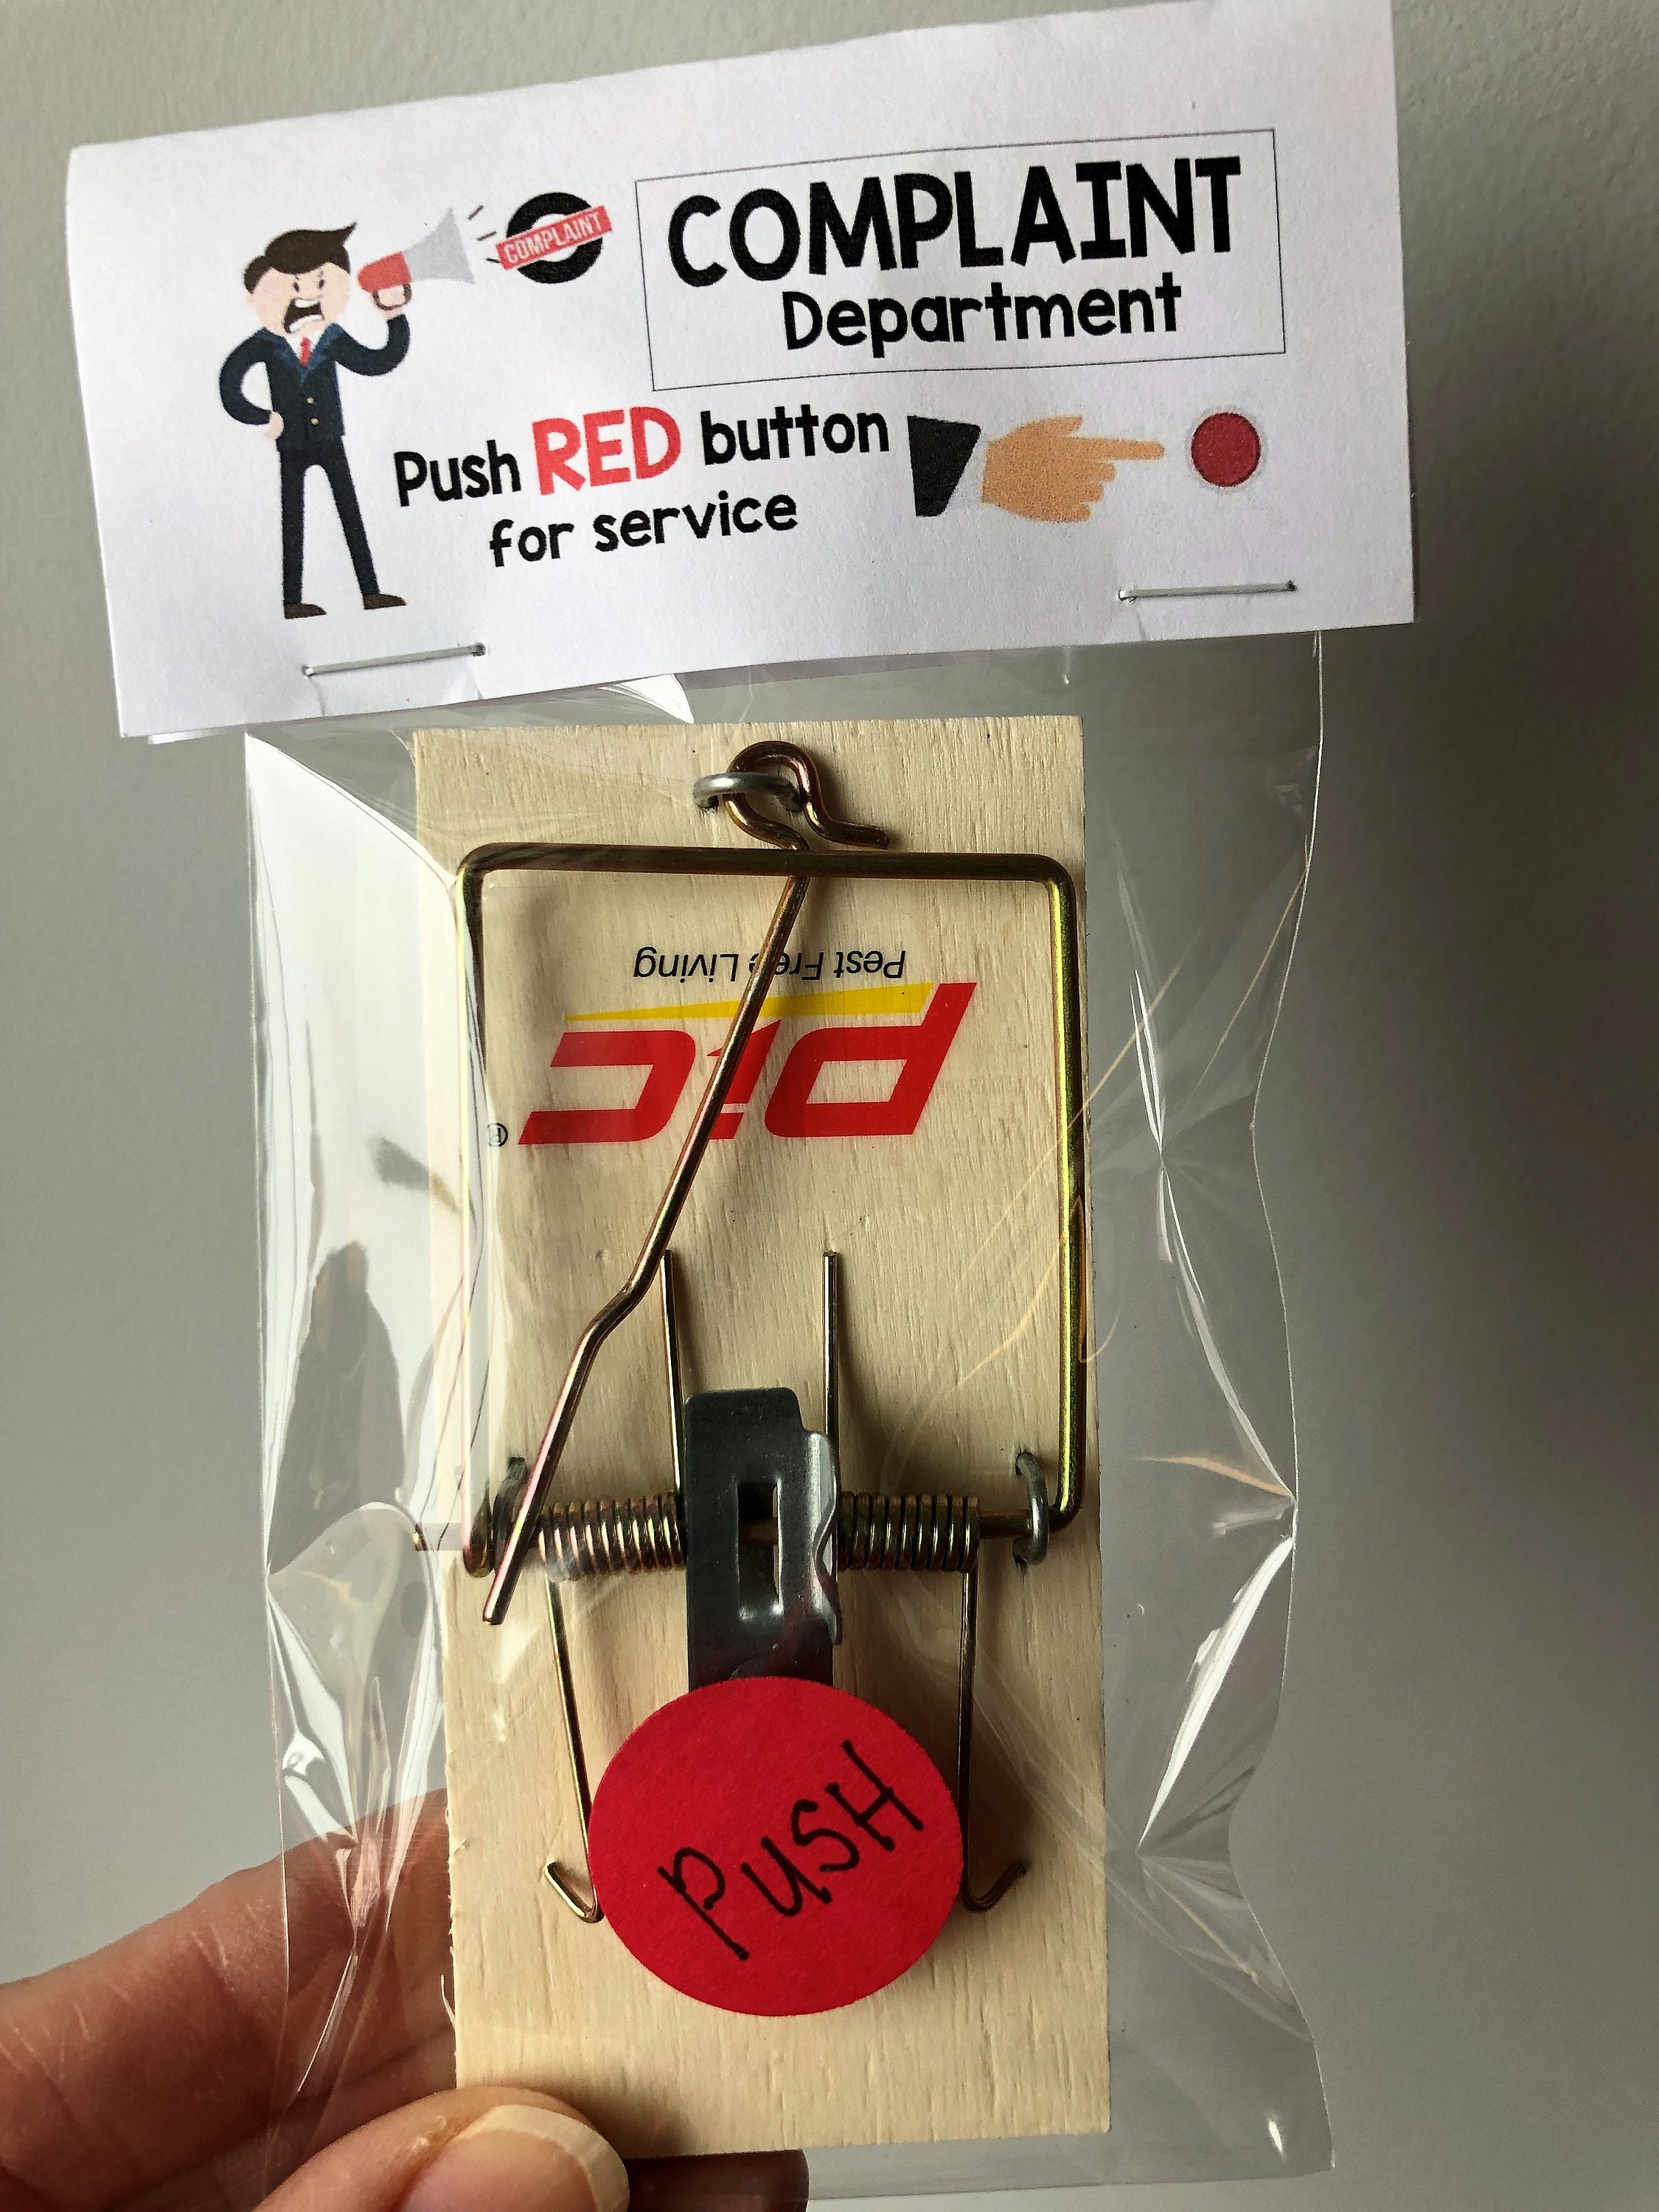 Big Red No! Button Sound Toy Novelty Gift Office Desk Joke Gag Funny